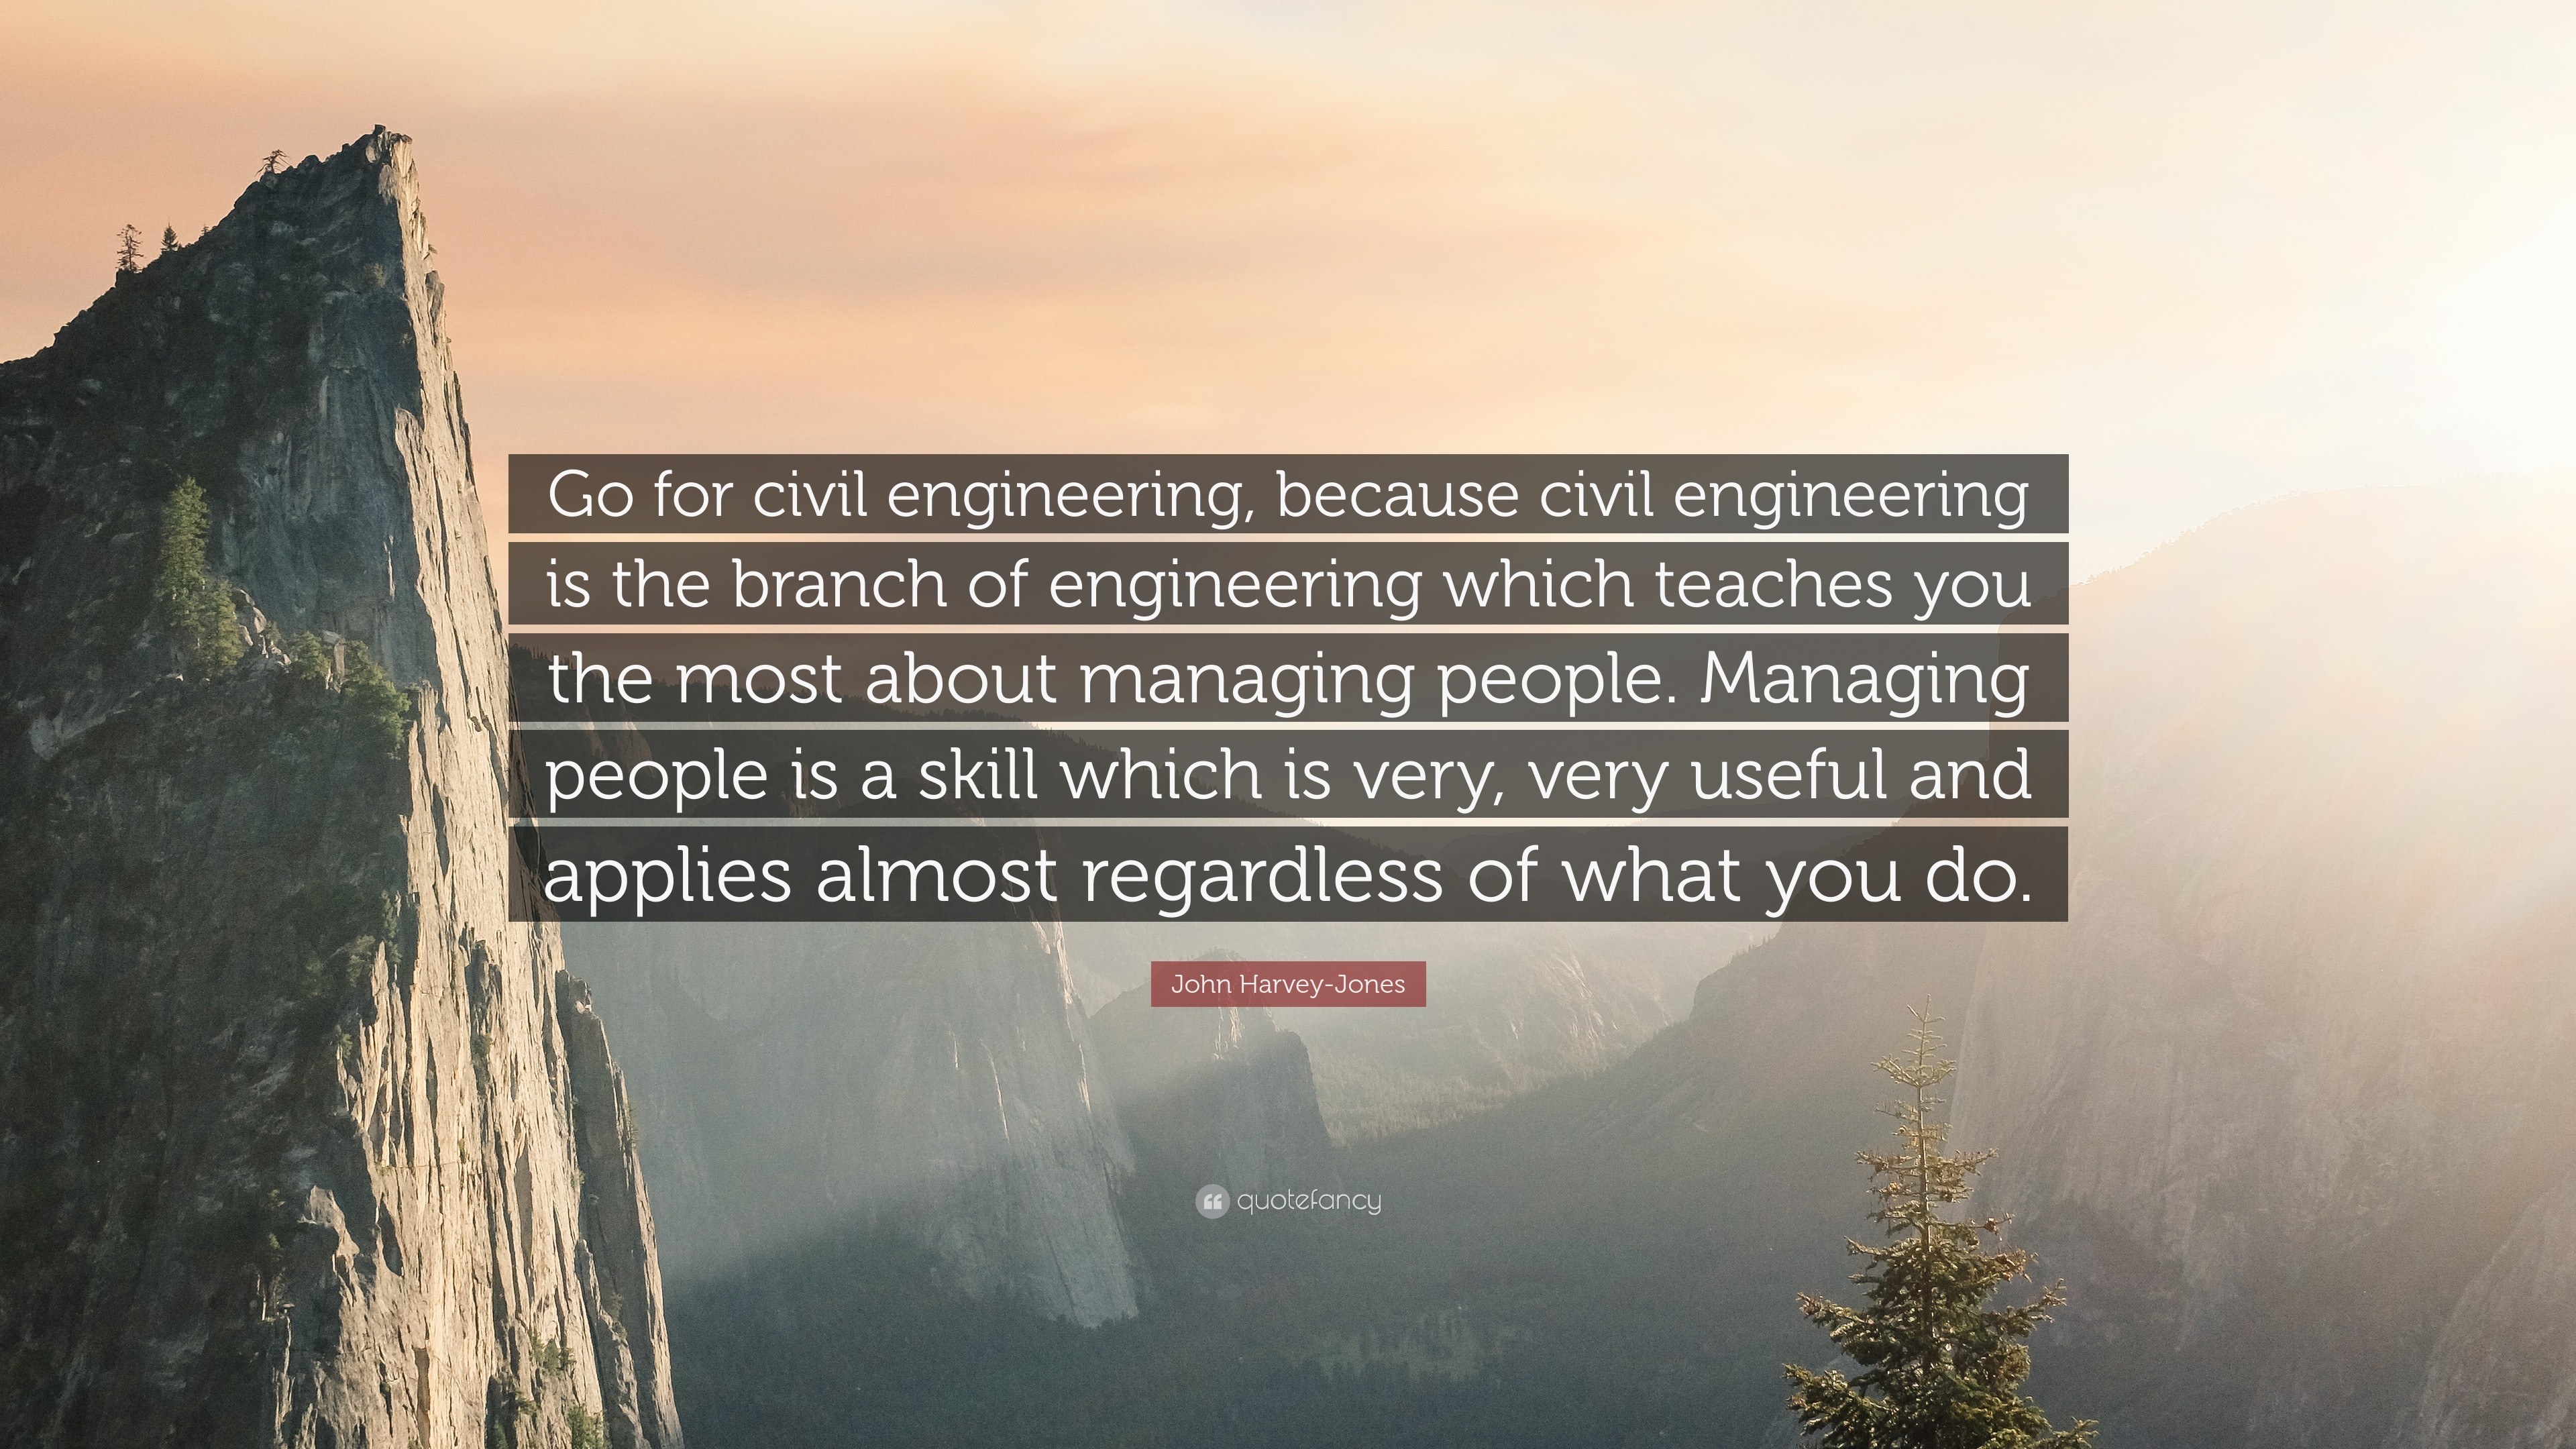 3840x2160 John Harvey-Jones Quote: “Go for civil engineering, because civil  engineering is